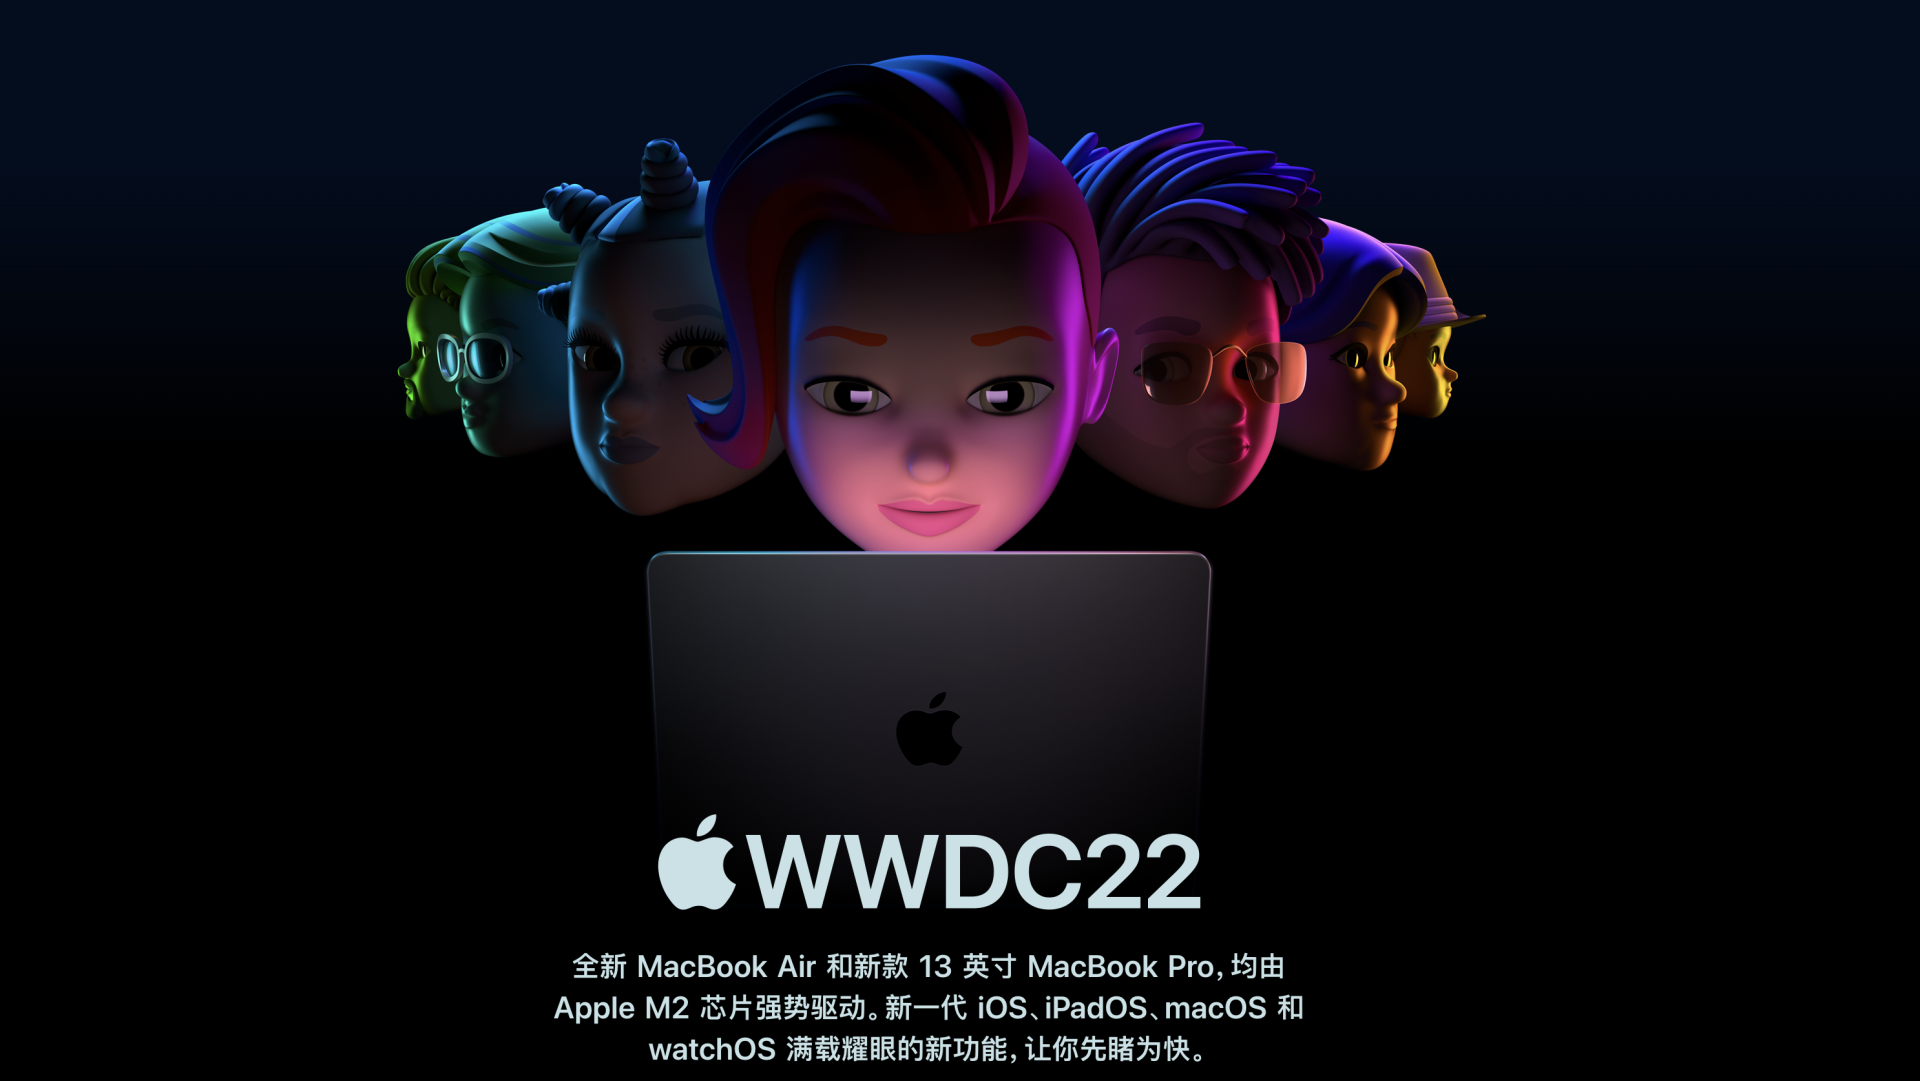 WWDC2022 cover